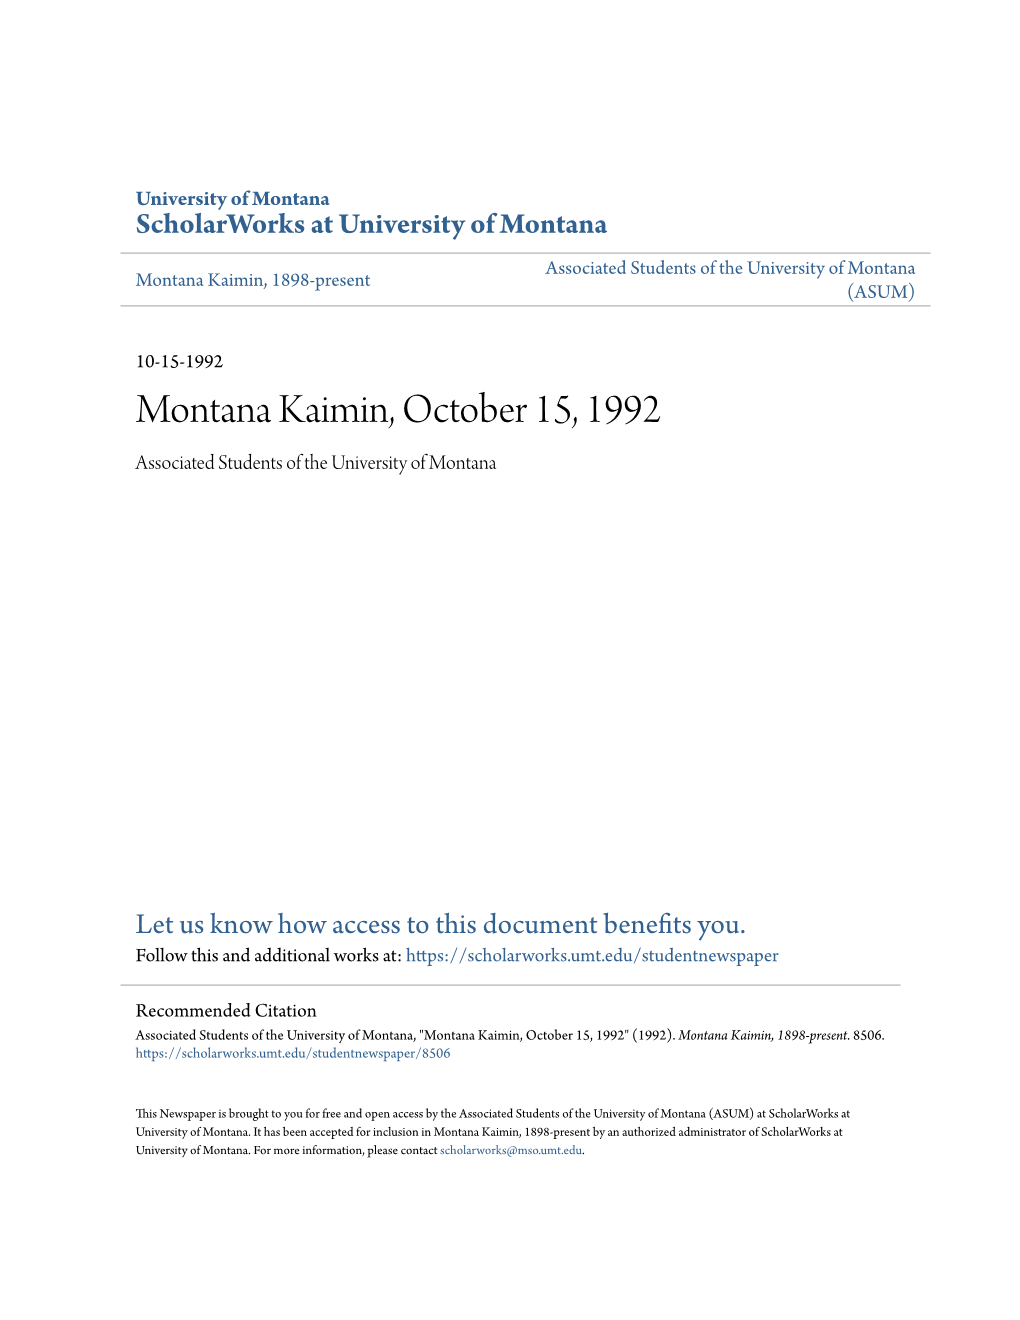 Montana Kaimin, October 15, 1992 Associated Students of the University of Montana